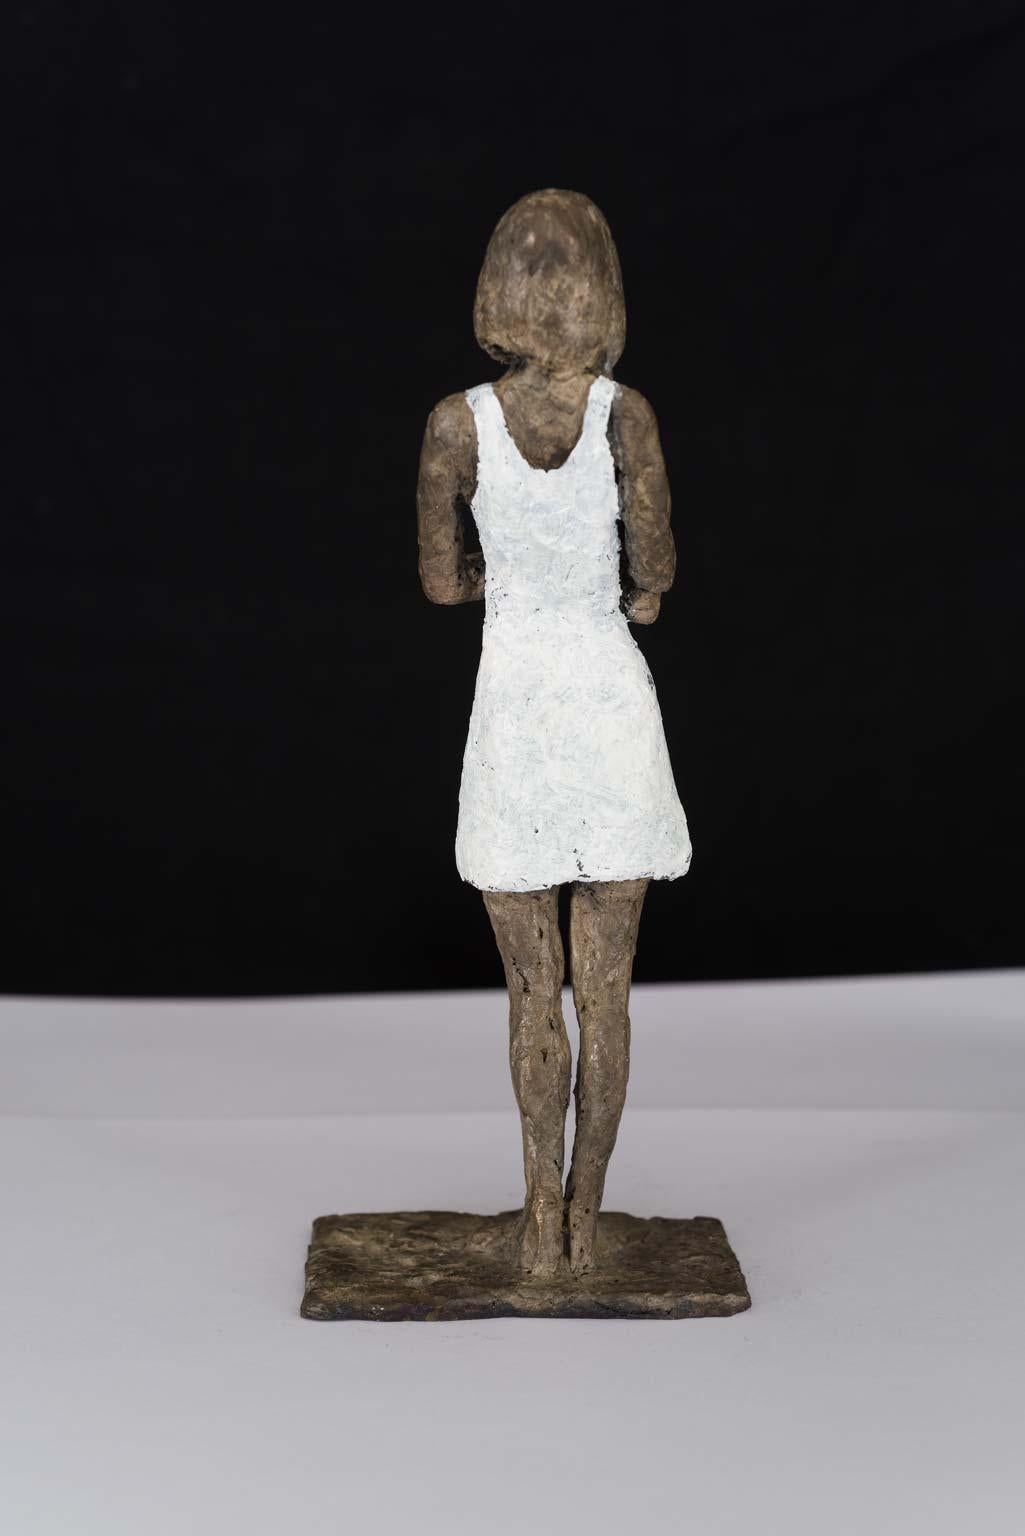 Girl in Mini Dress - contemporary bronze sculpture, nude female with white dress - Sculpture by Susanne Kraisser